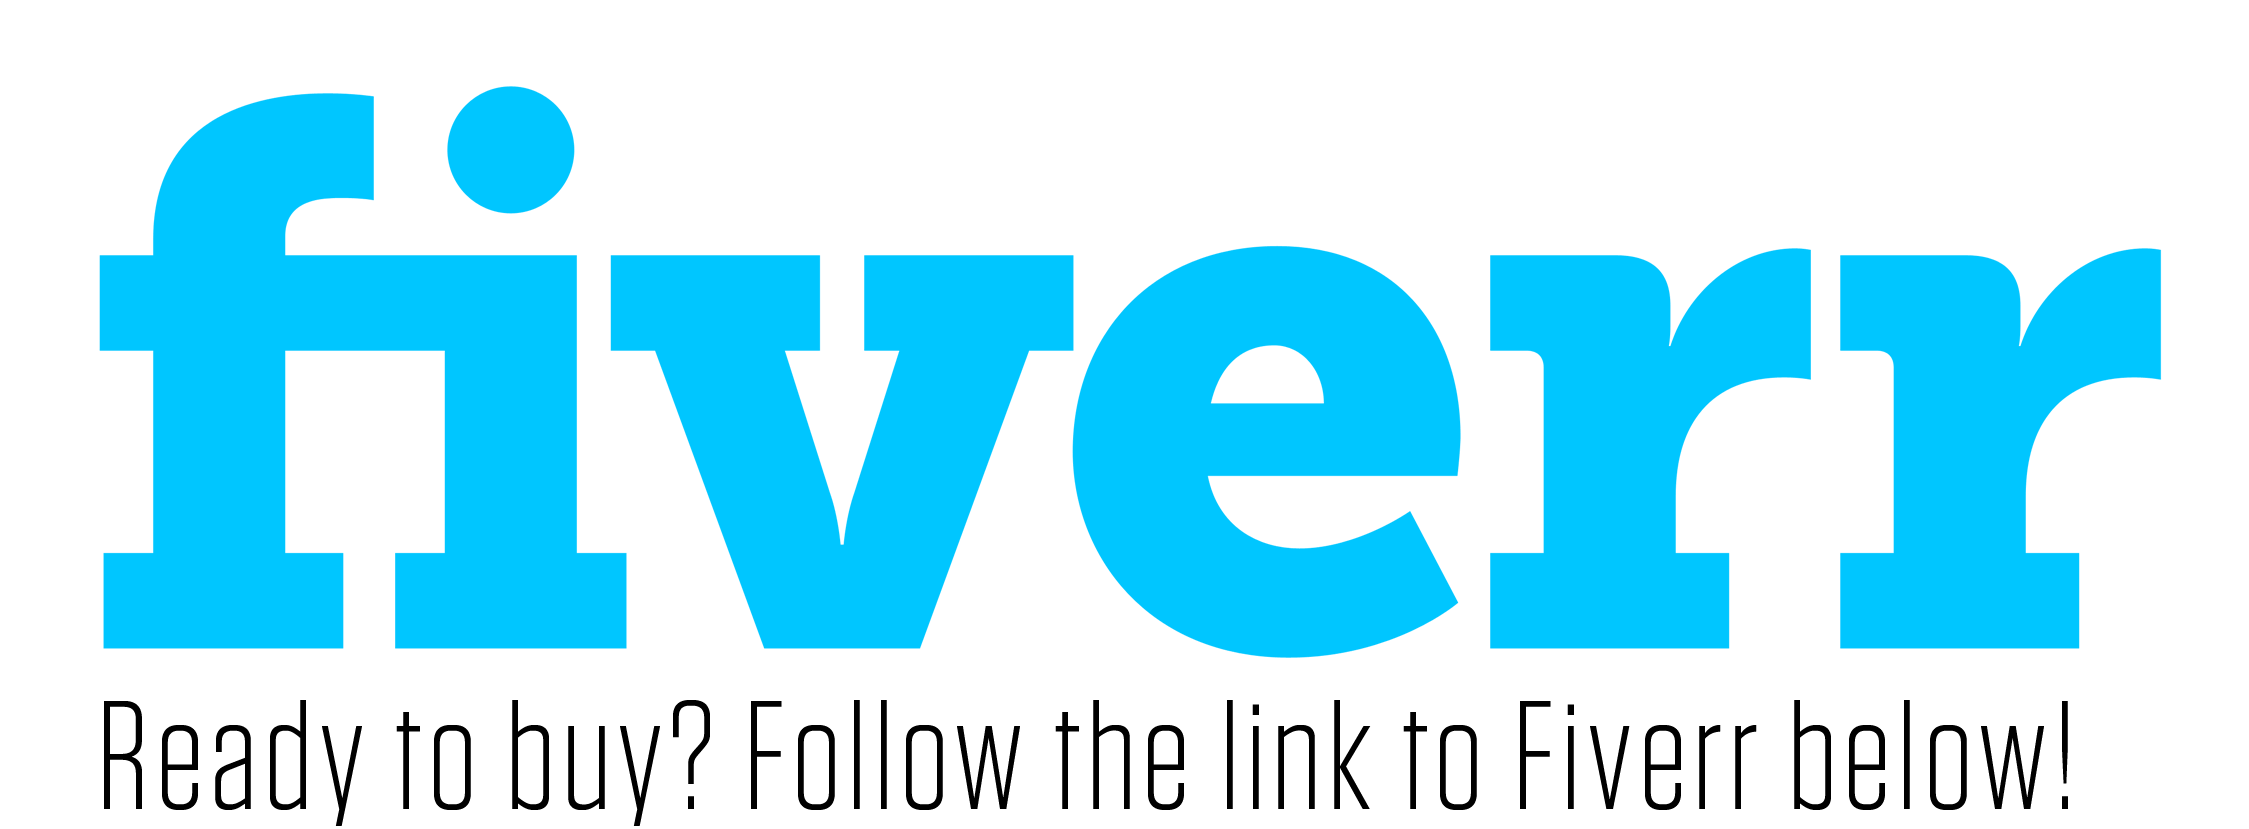 Fiverr logo, logotype